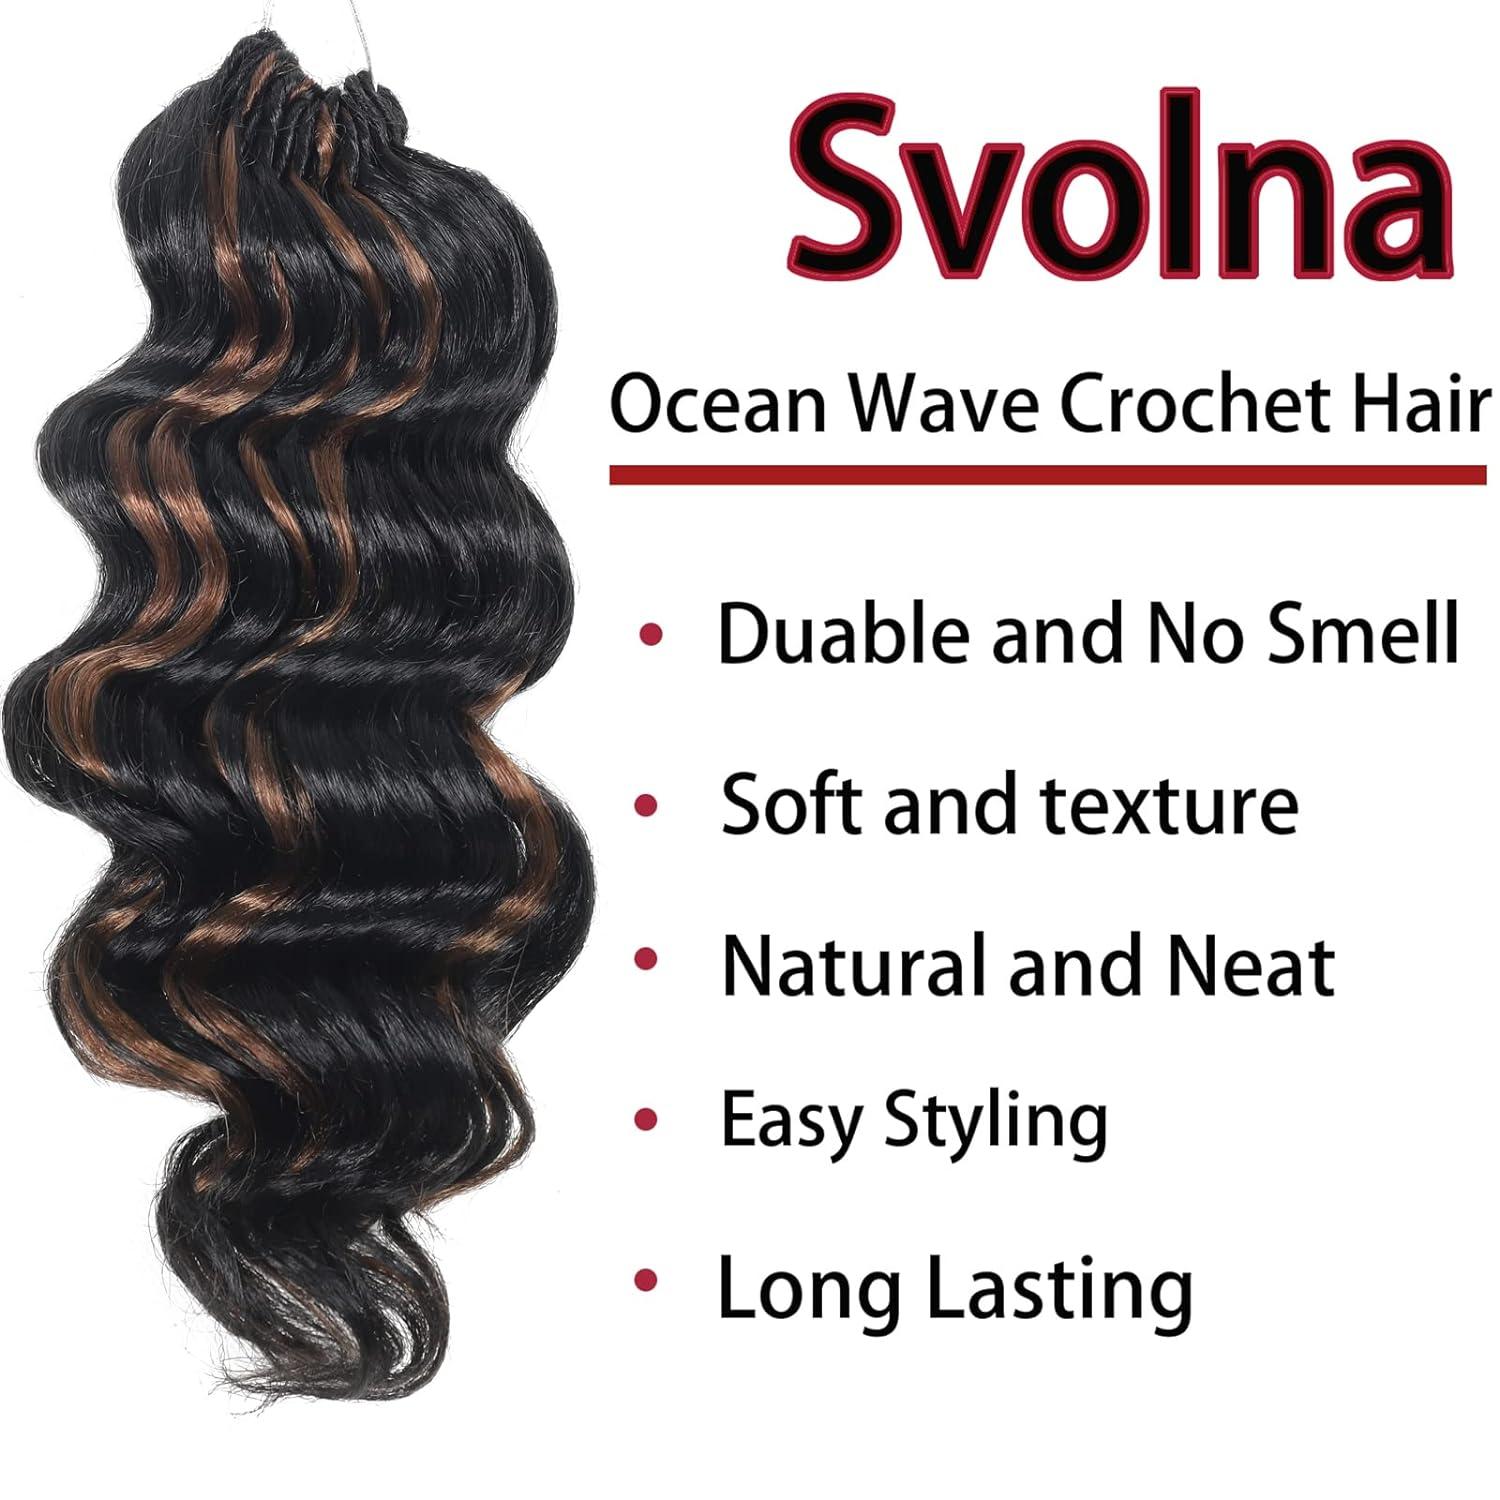 Ocean Wave Crochet Hair 9  Pre-Looped Wavy Curly Crochet